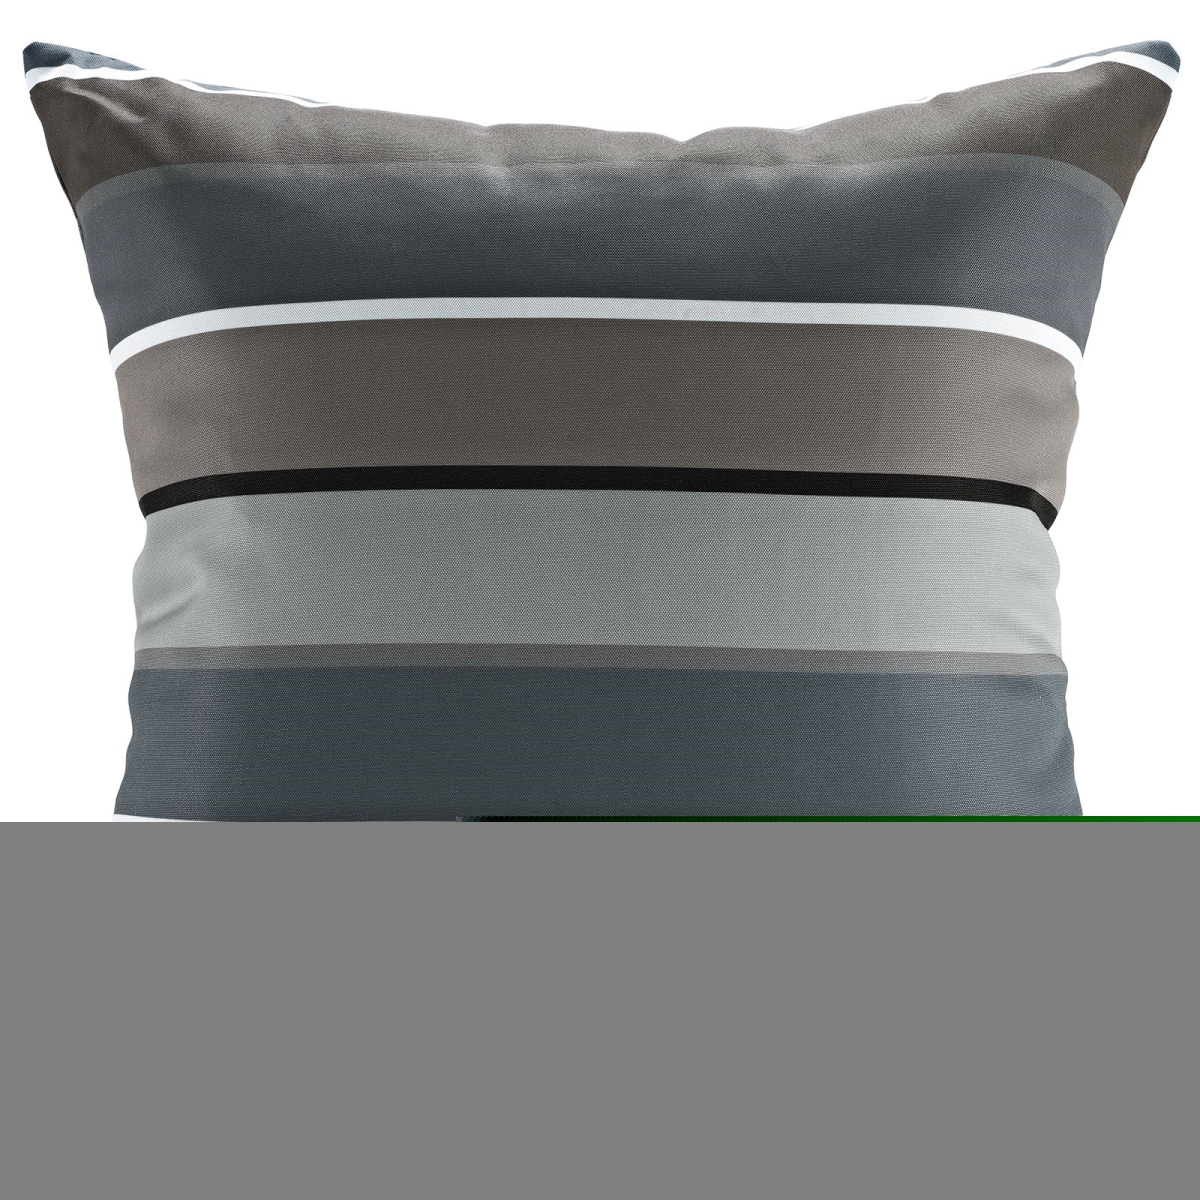 Modway Eei-2156-str Modway Outdoor Patio Pillow, Stripe